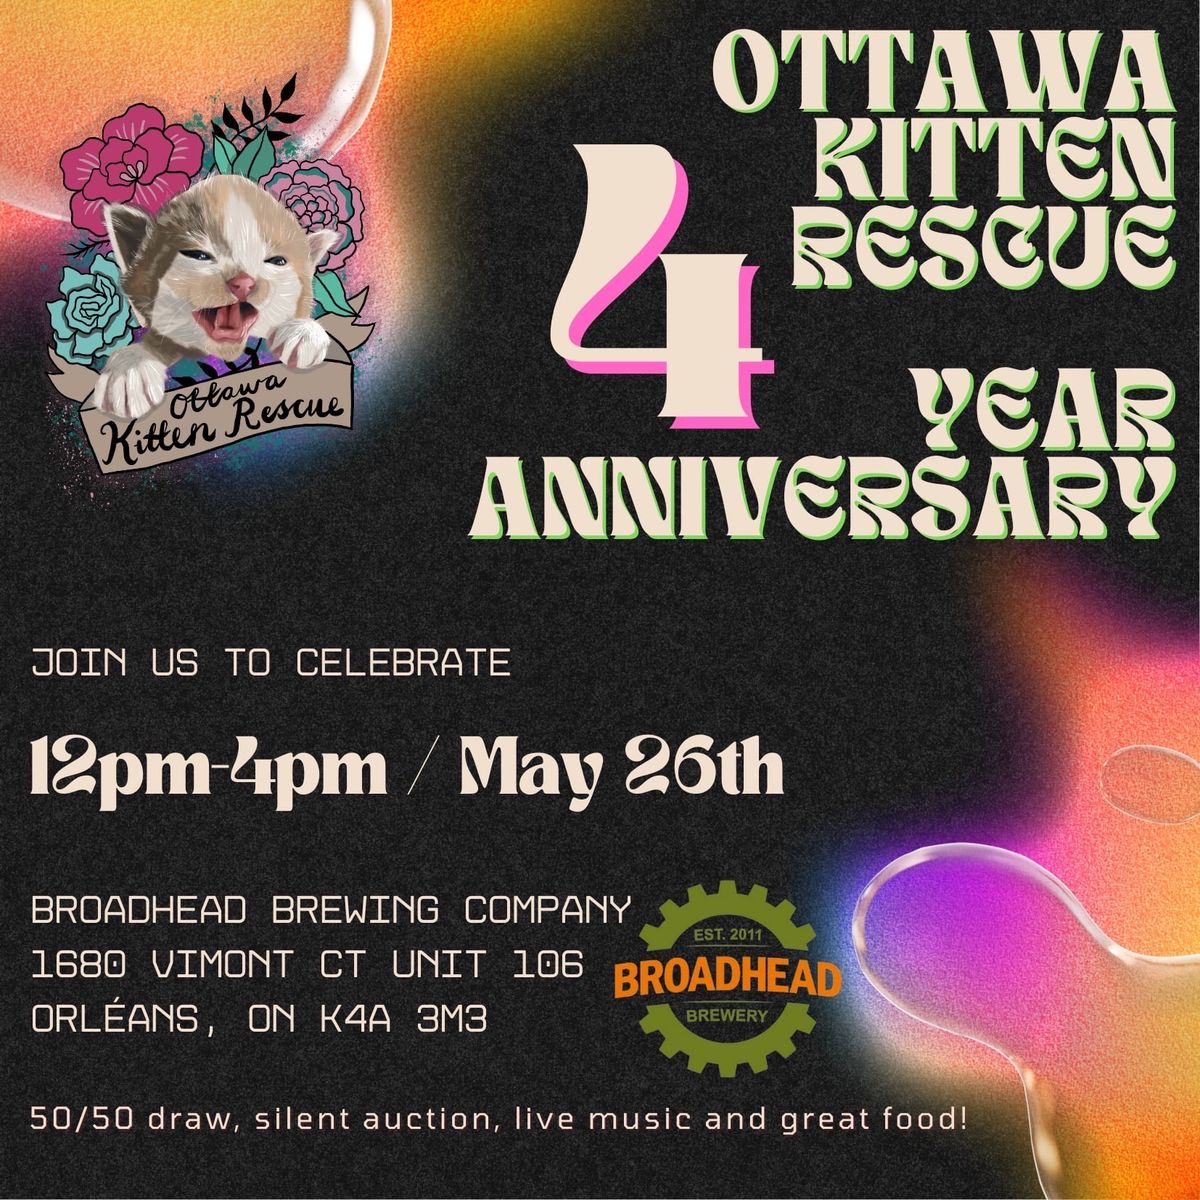 Ottawa Kitten Rescue's 4th Anniversary Celebration & Fundraiser